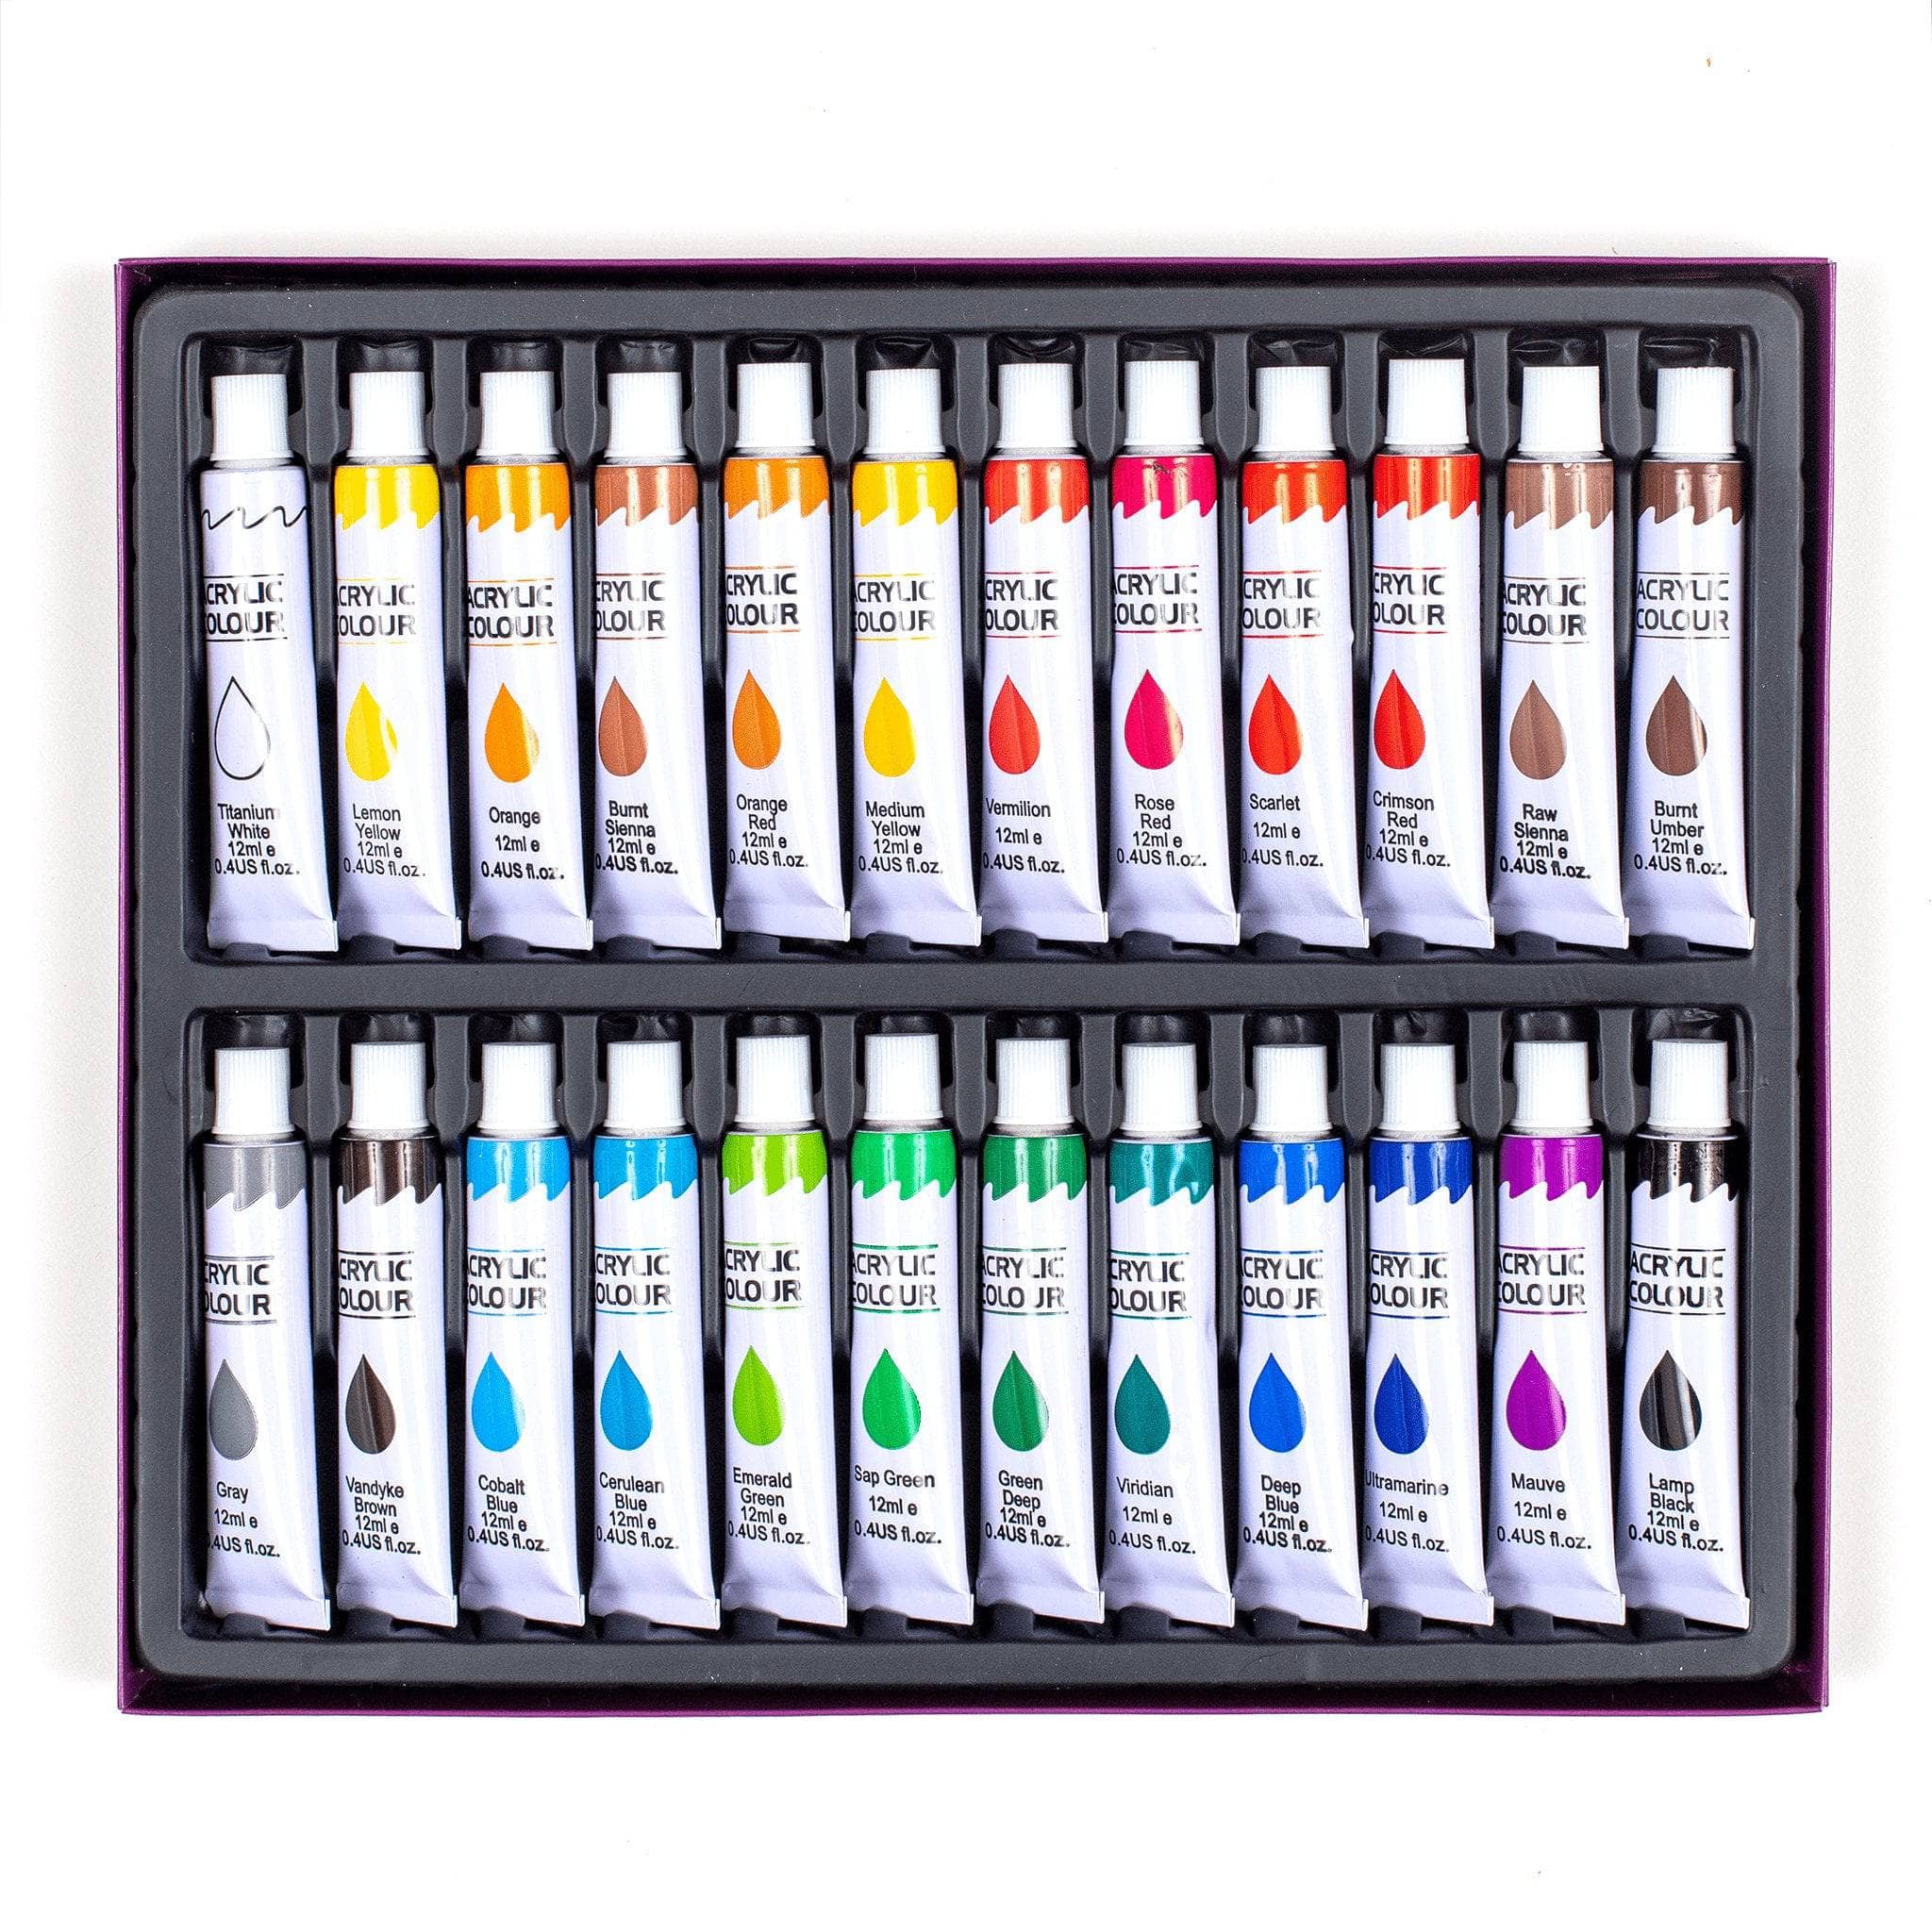 Acrylic Paint Set - 24 Colors - Non Toxic – Darn Good Yarn